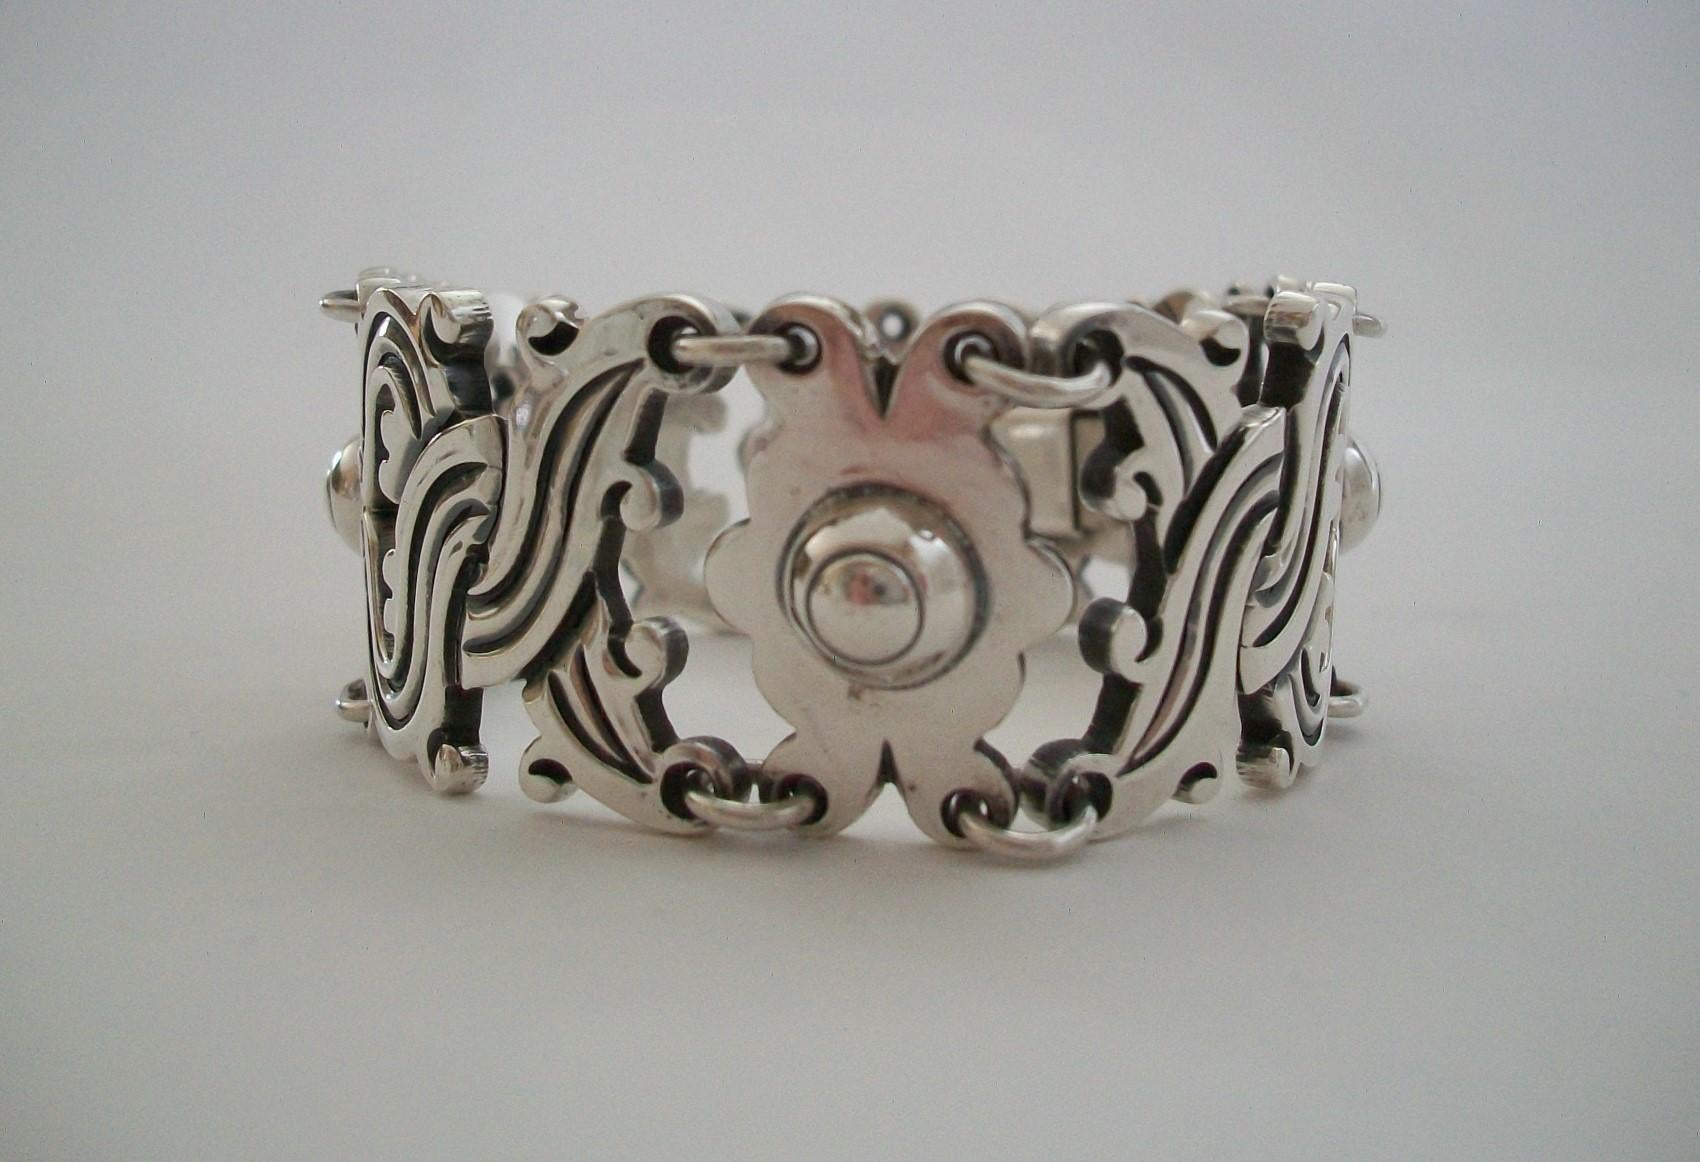 hecho en mexico silver bracelet